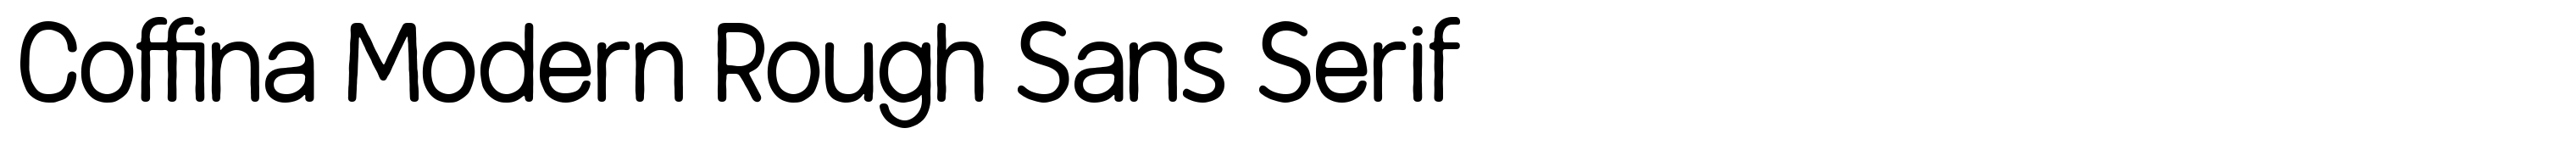 Coffina Modern Rough Sans Serif